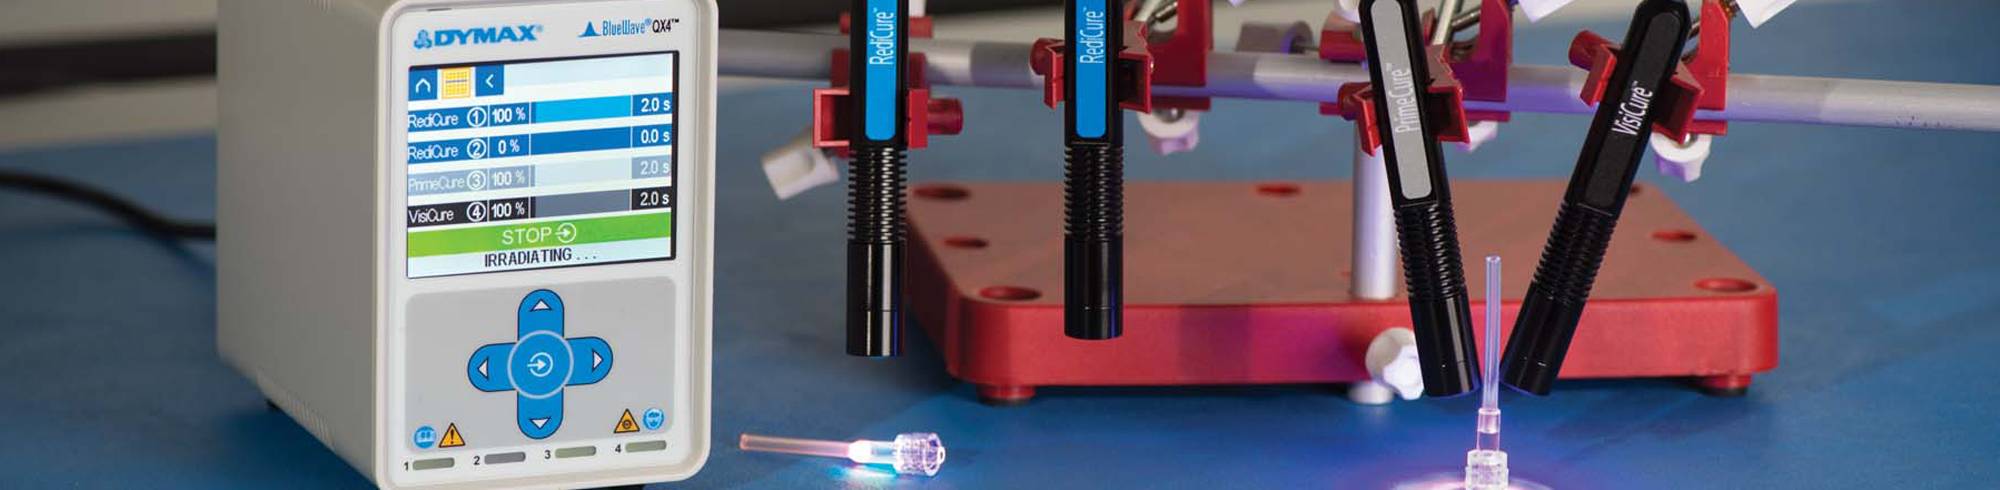 Dymax台面LED和UV光固化点光源